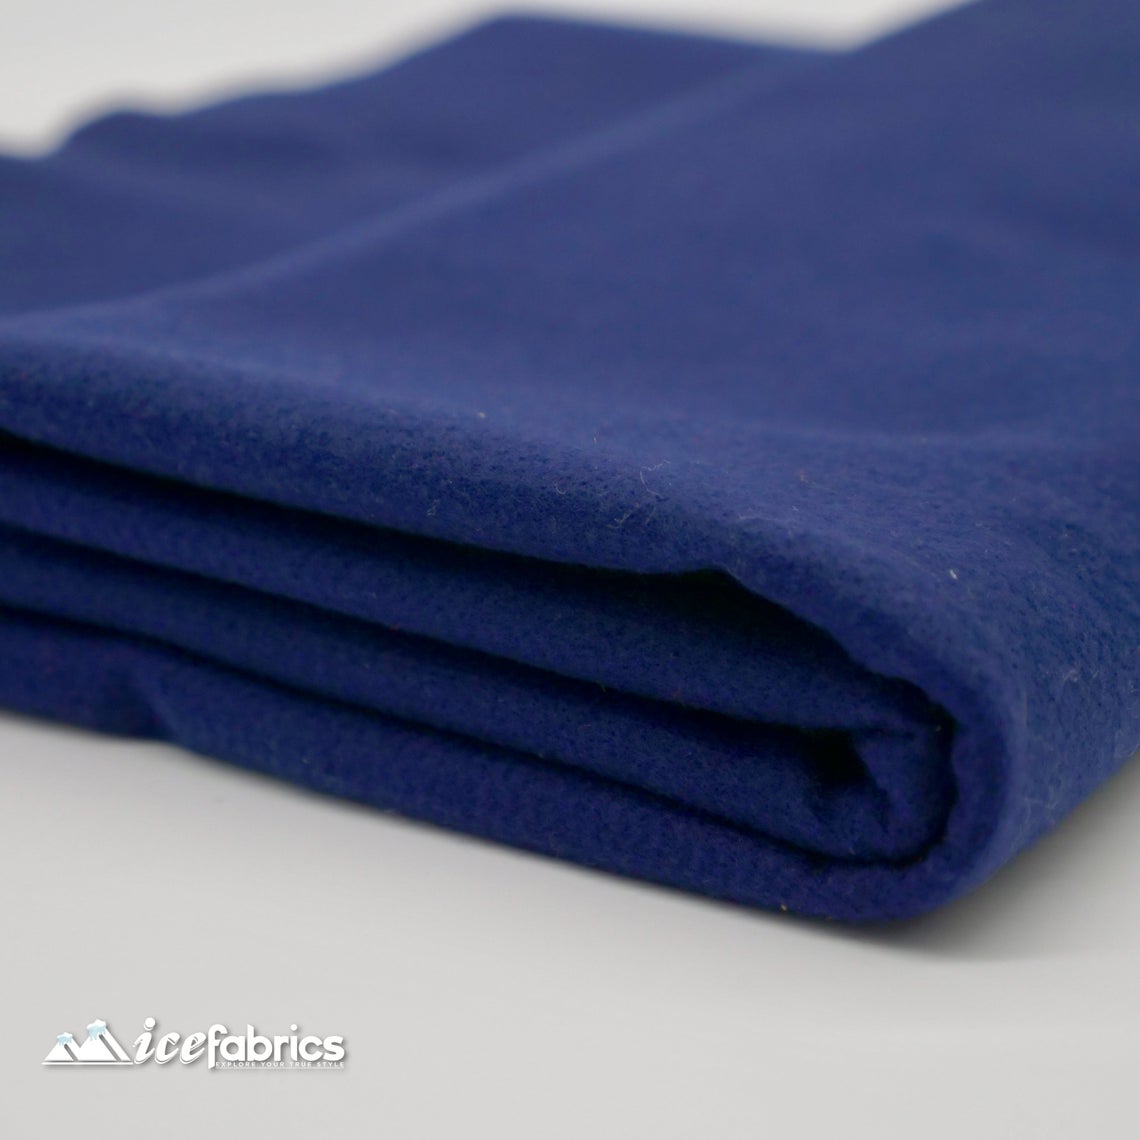 Acrylic Felt Fabric By The Roll | 20 yards | Wholesale Fabric ICE FABRICS Navy Blue 